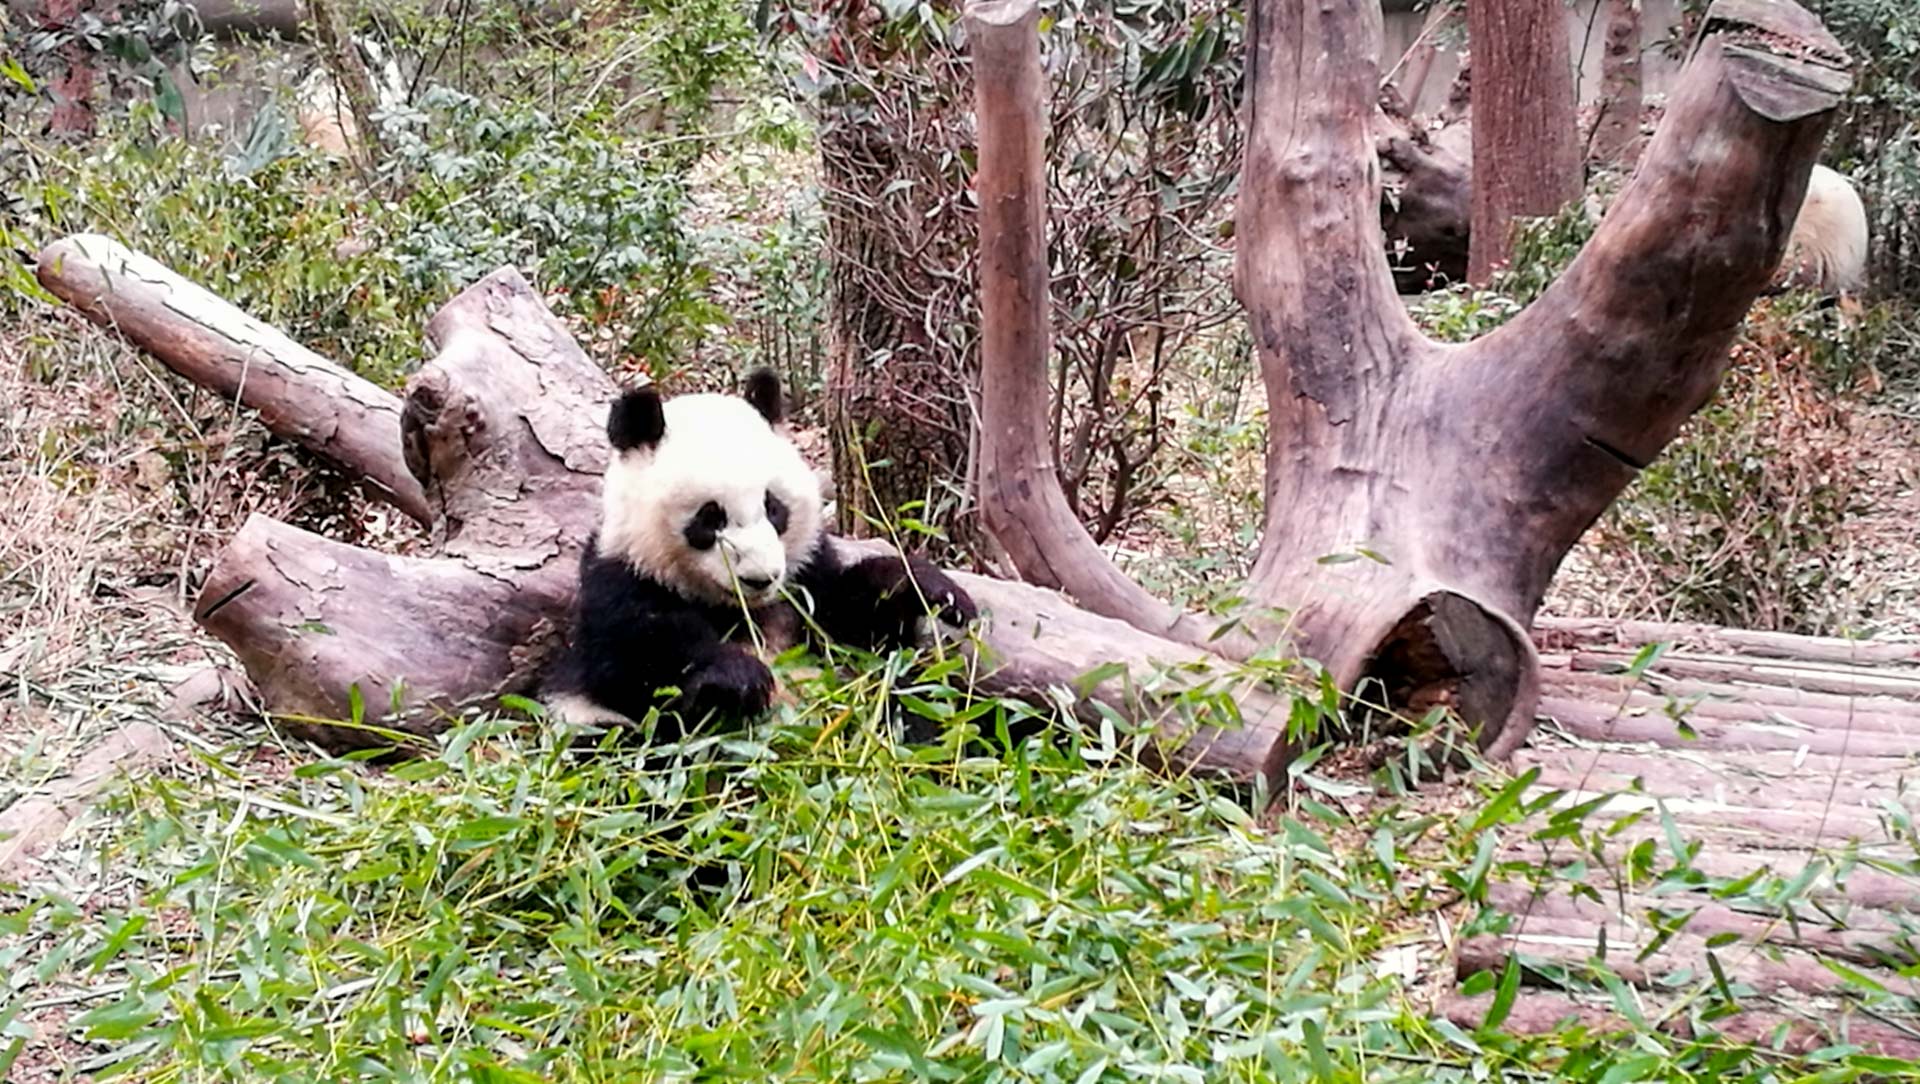 Ein panda sit i graset og eter